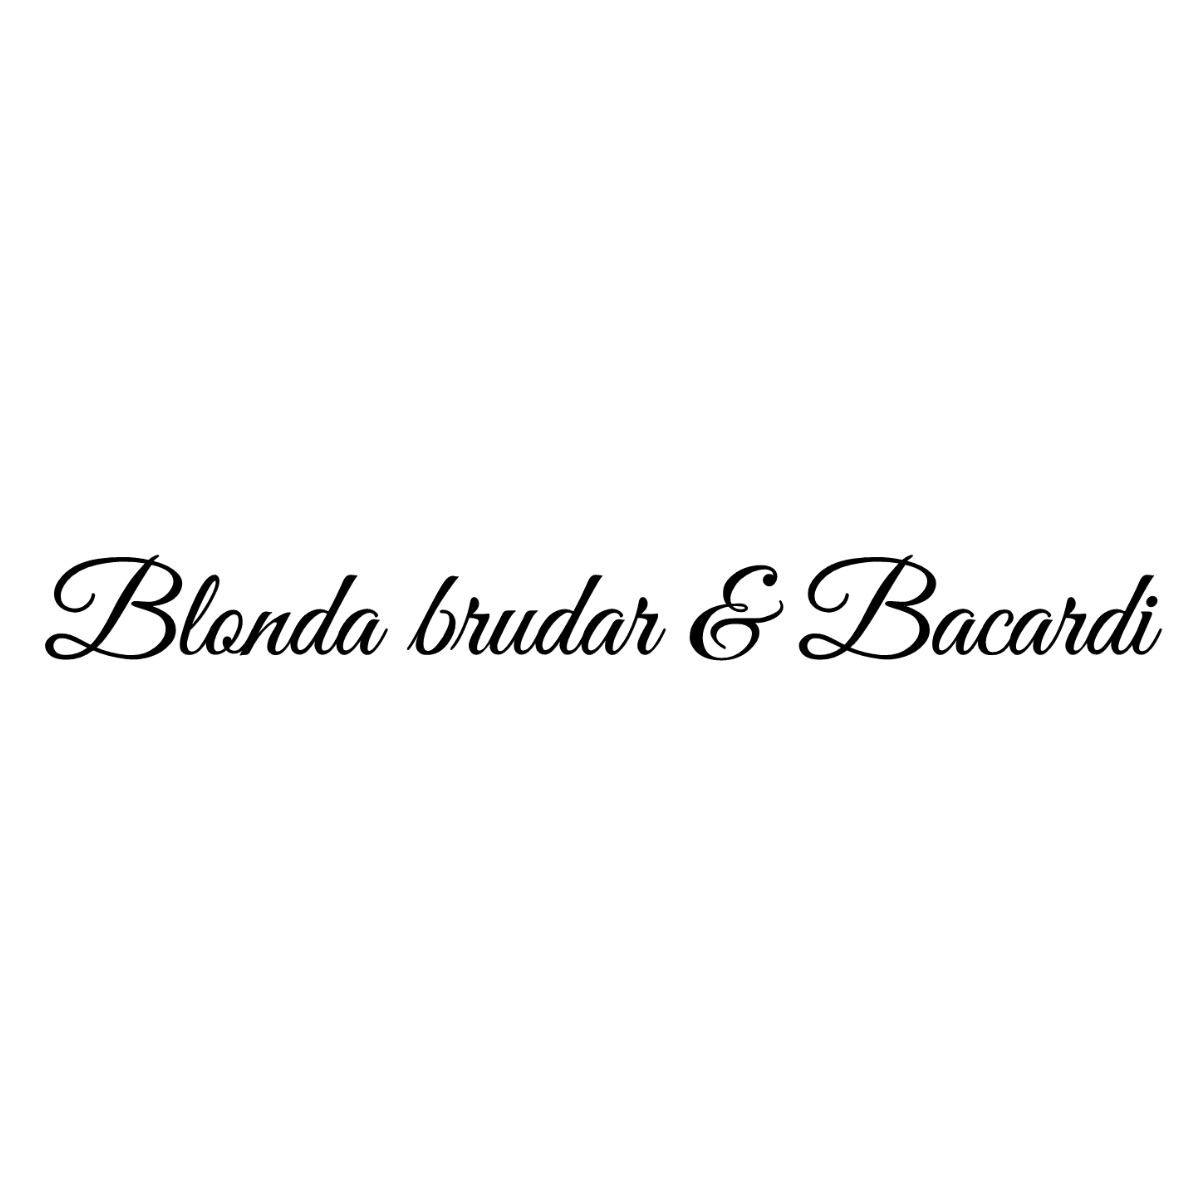 Blonda brudar & Bacardi